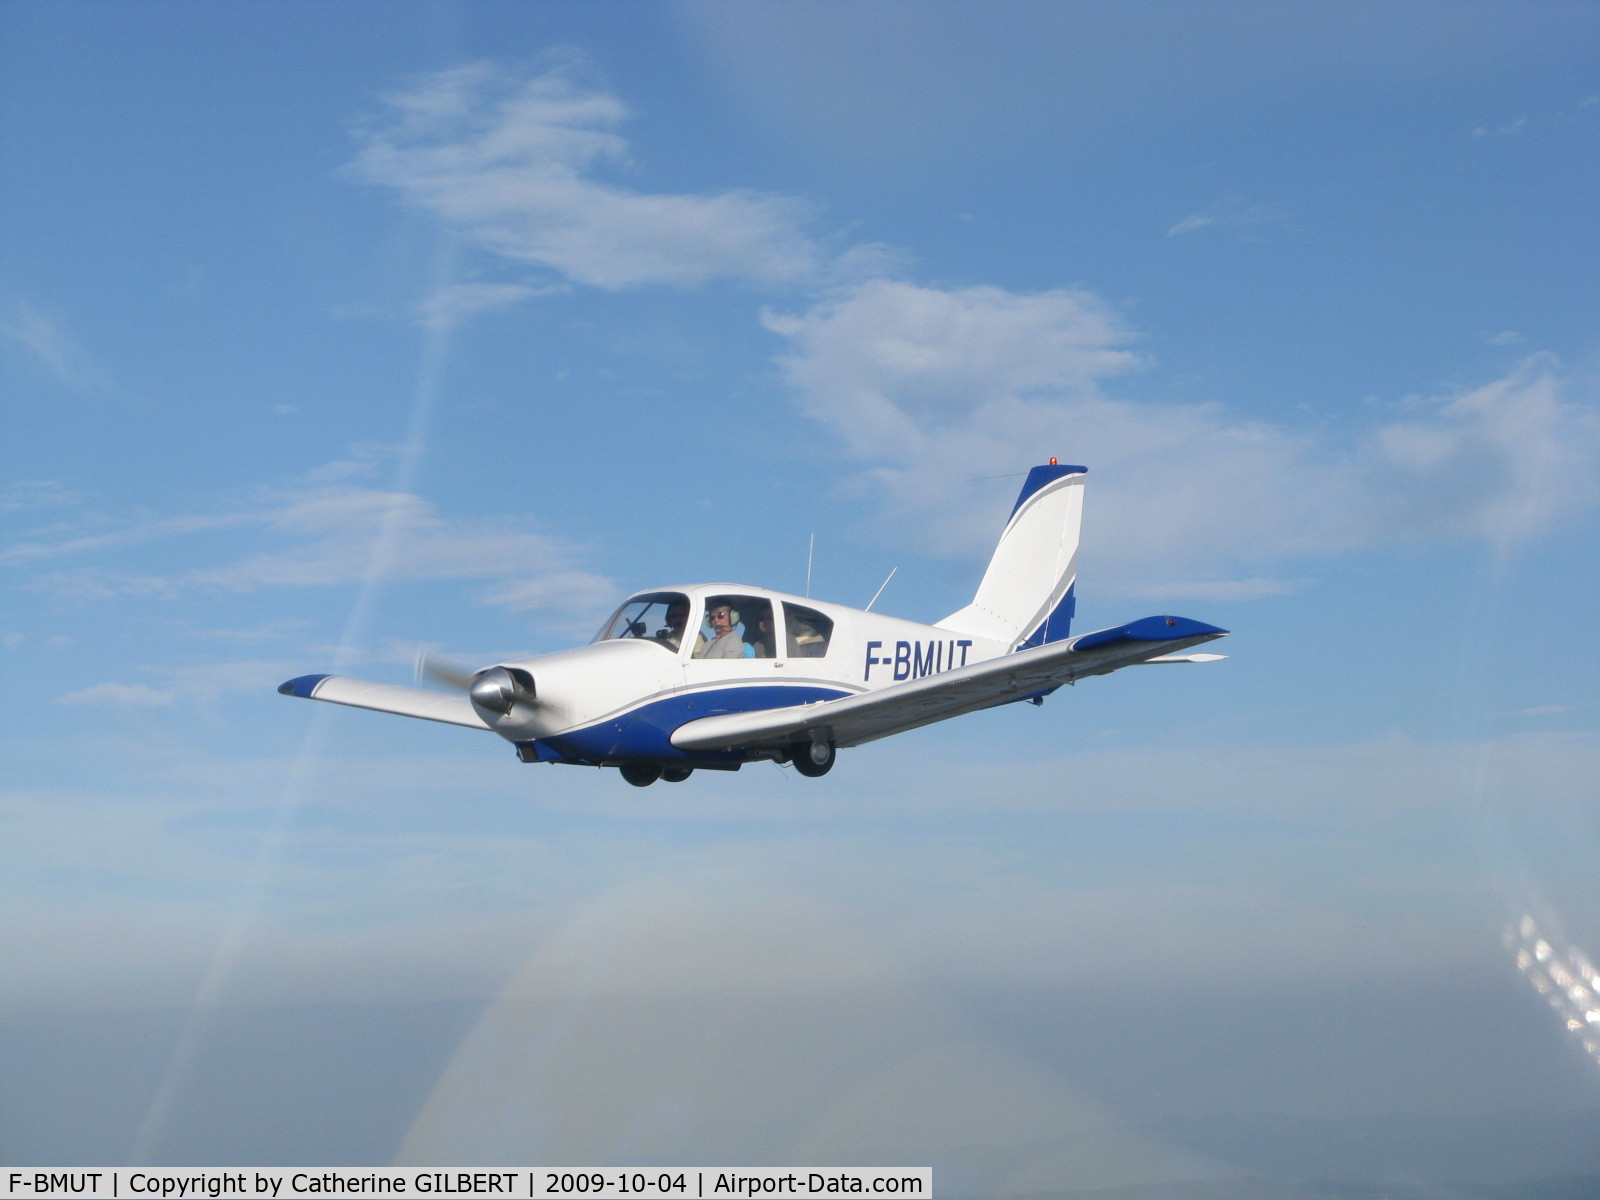 F-BMUT, Gardan GY-80-180 Horizon C/N 140, Flying in Provence (France)